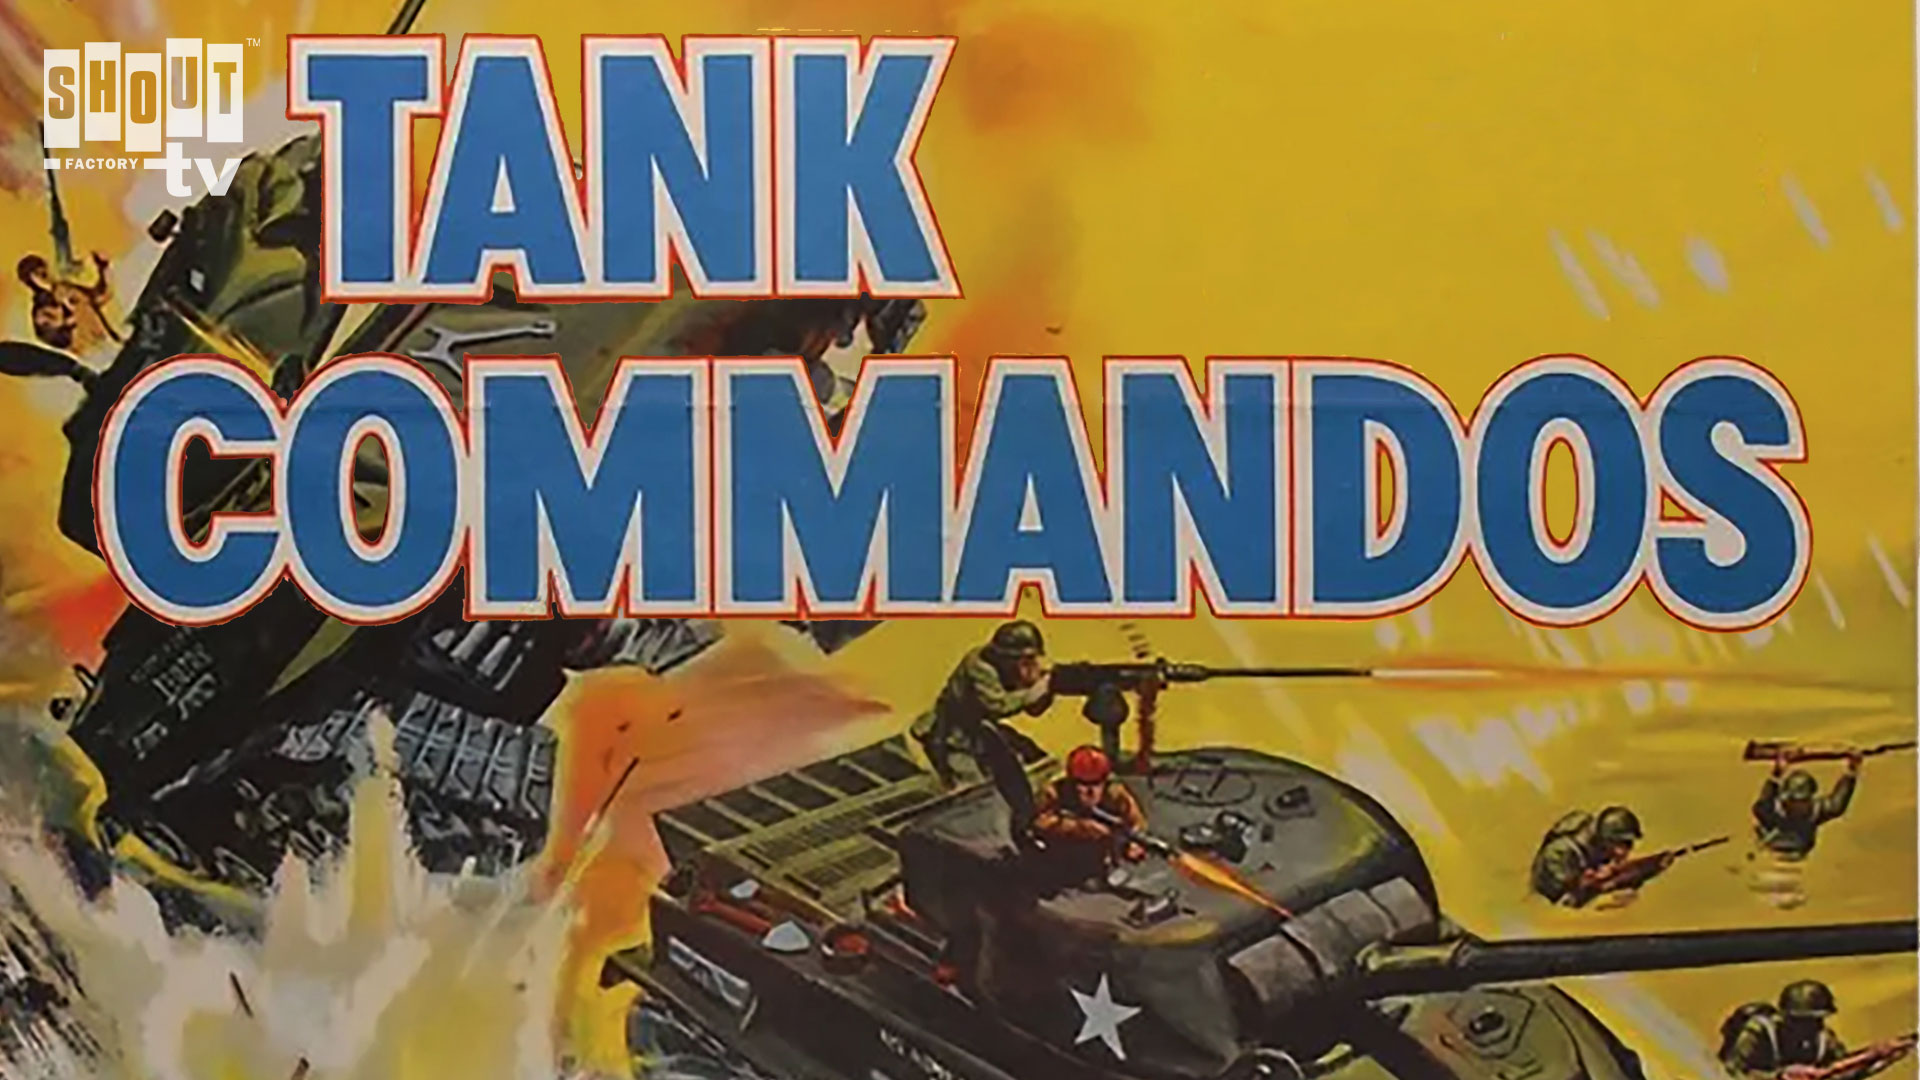 Tank Commandos